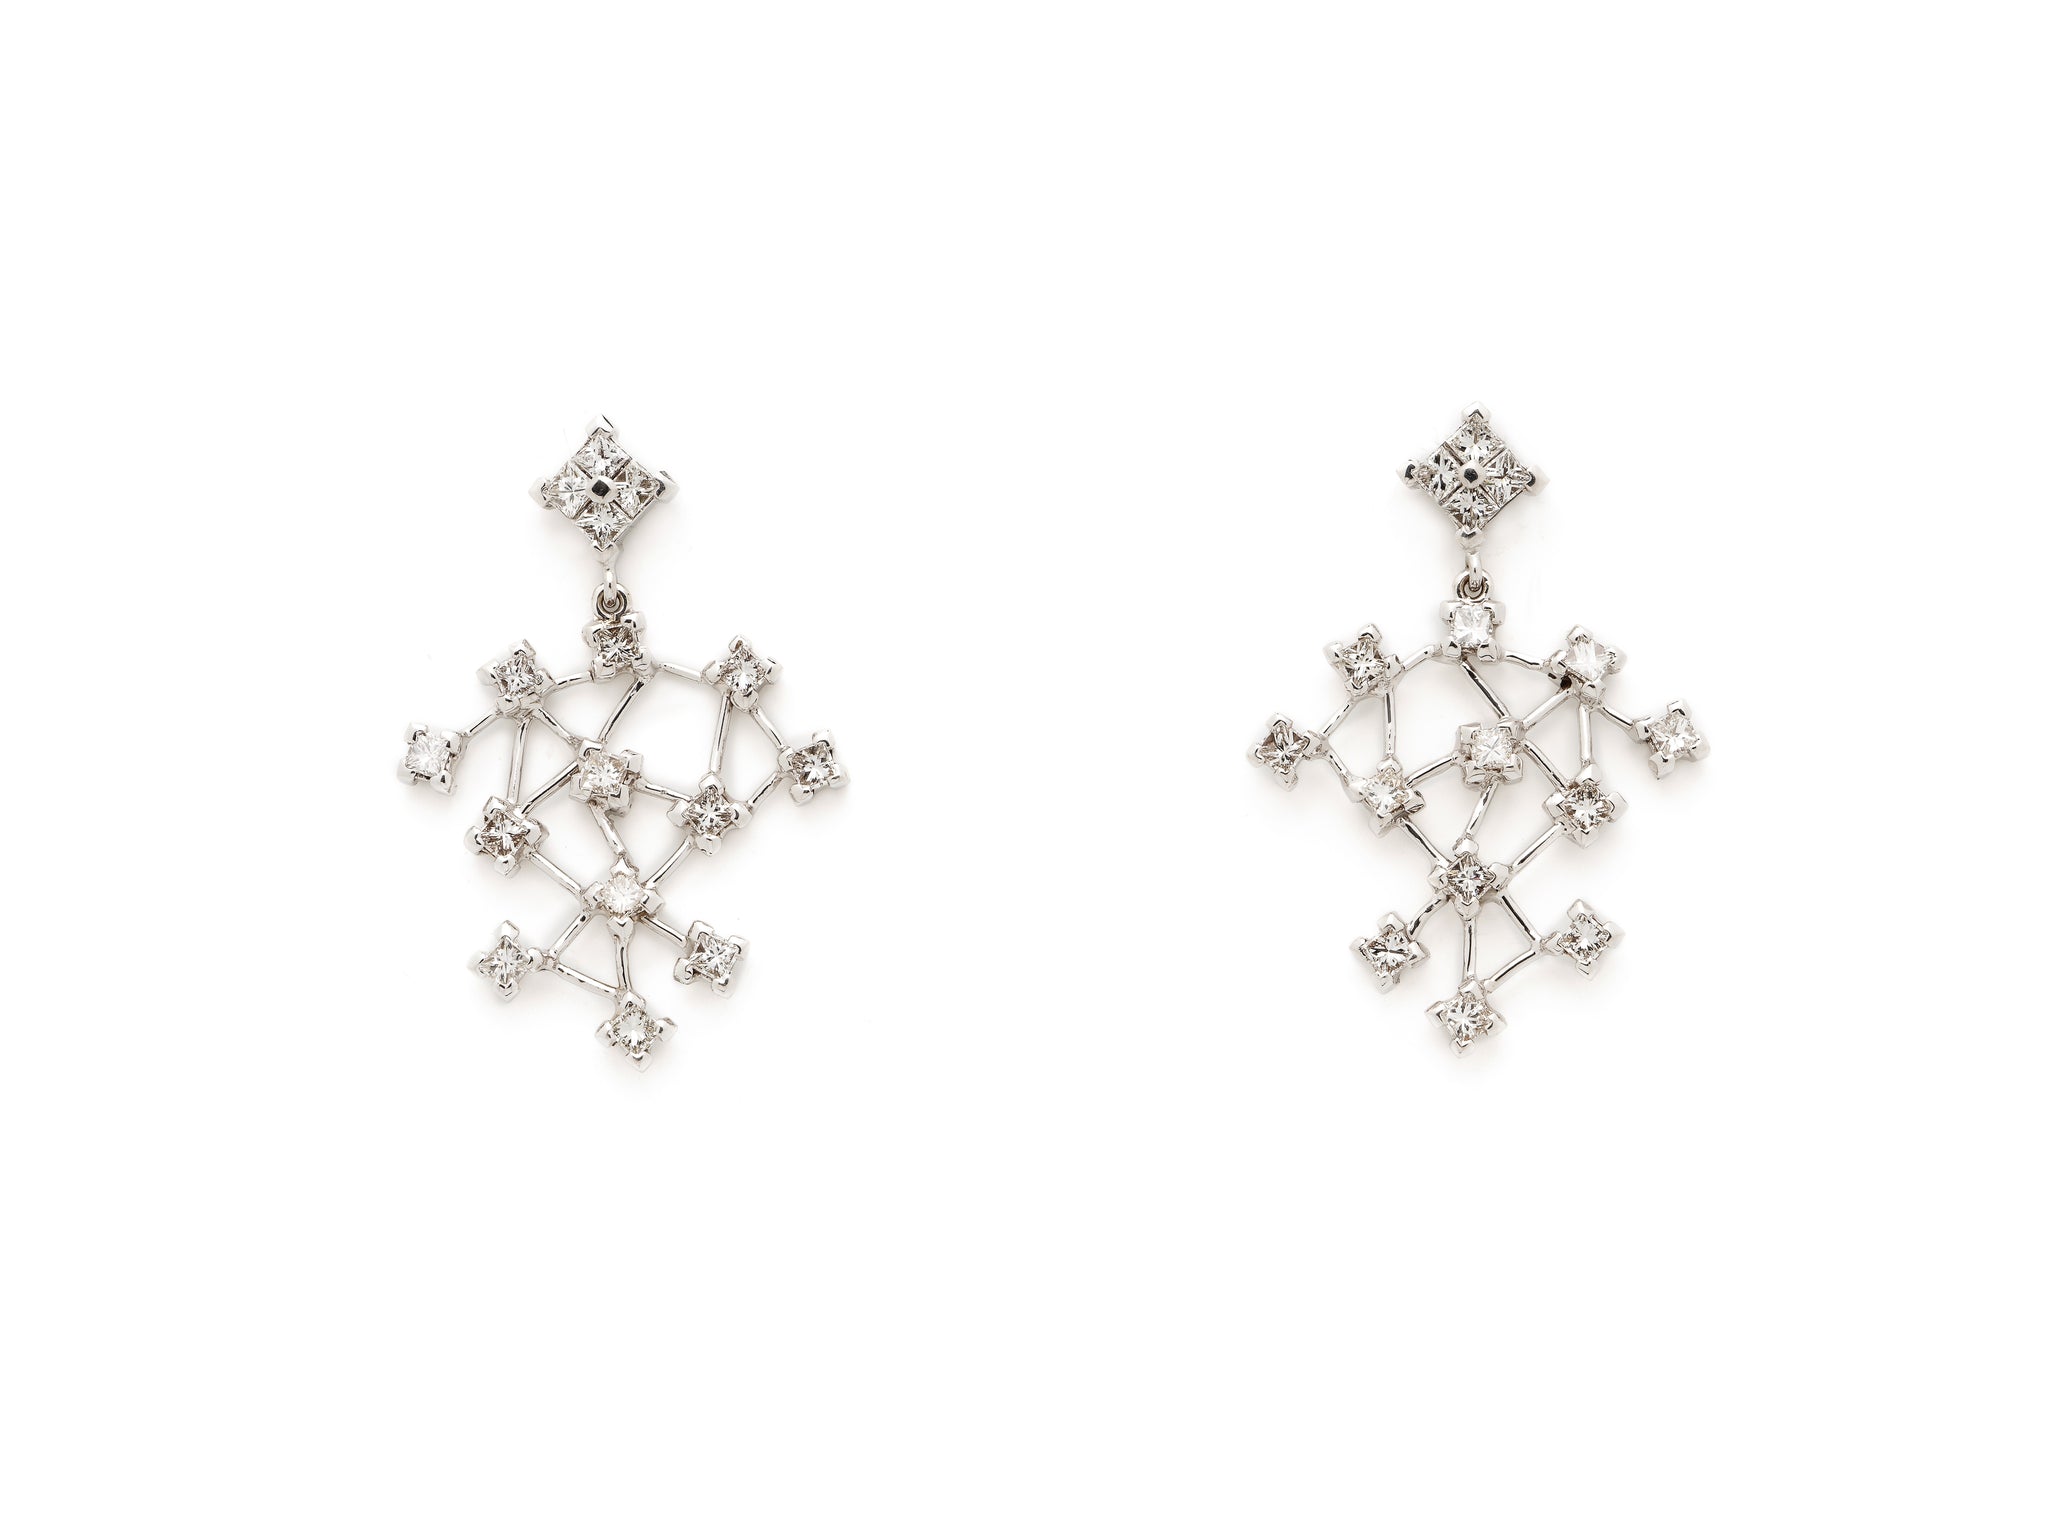 18 krt white gold earrings set with 32 princess diamonds